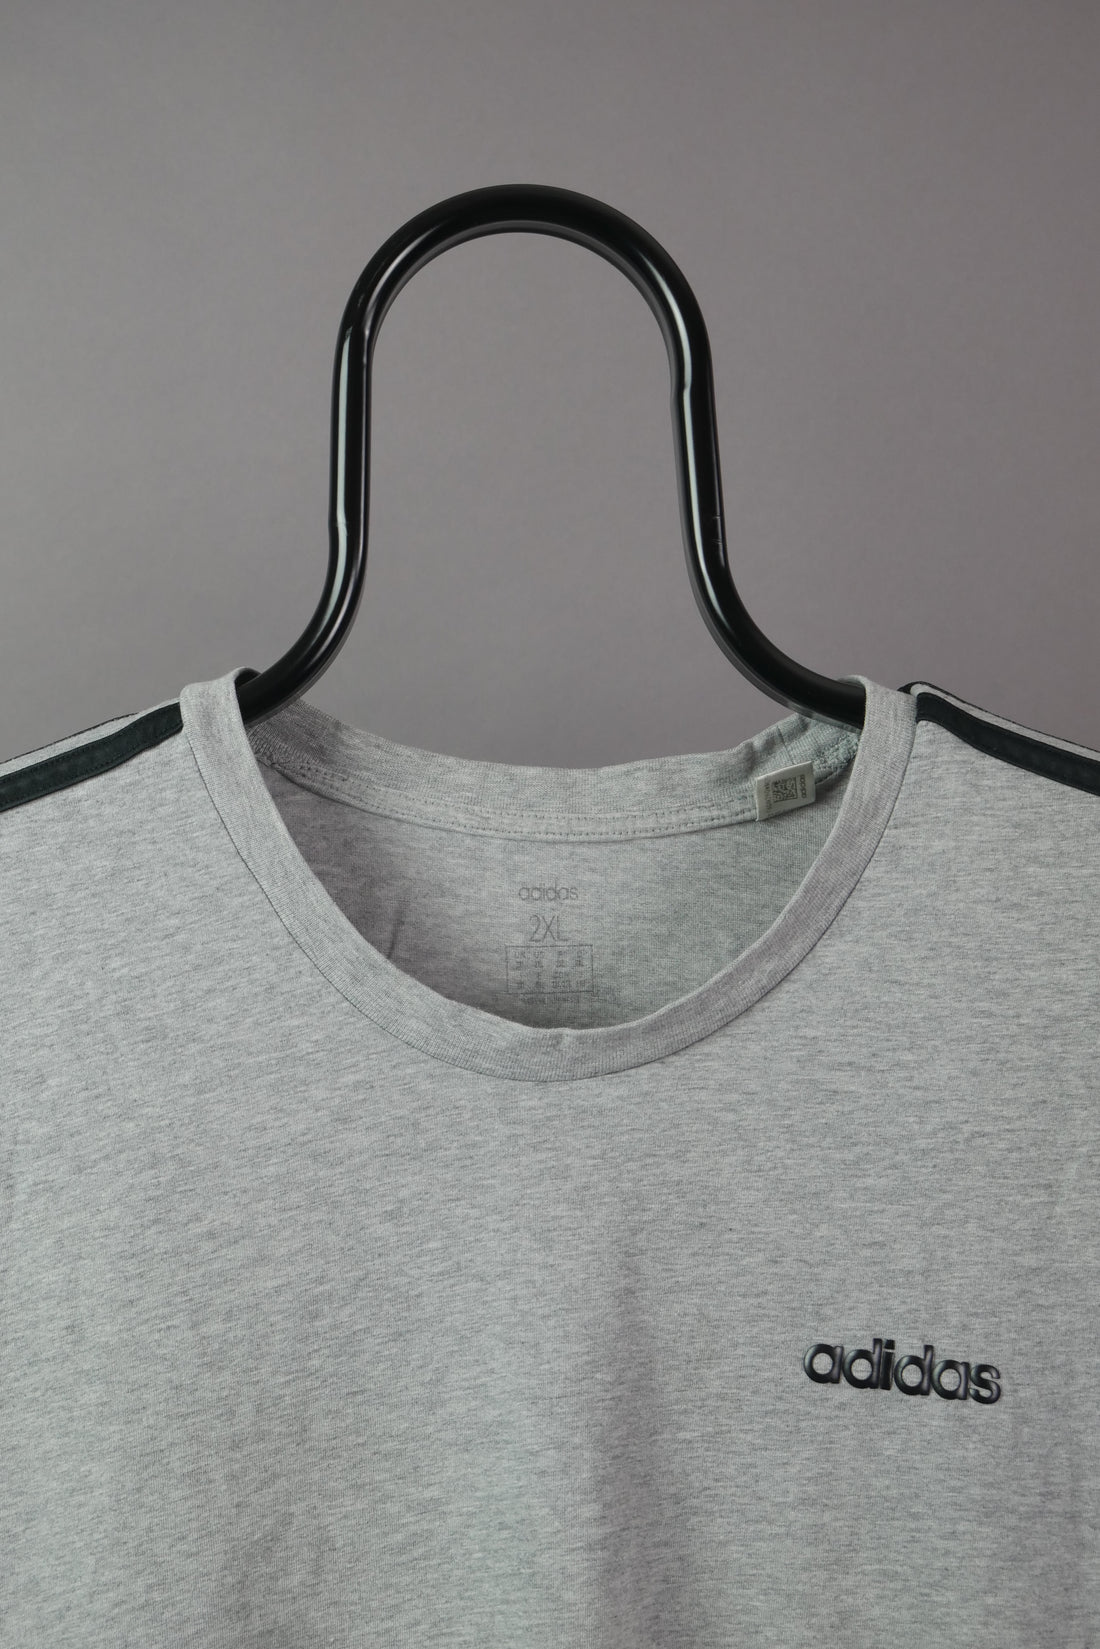 The Adidas T-Shirt (XXL)